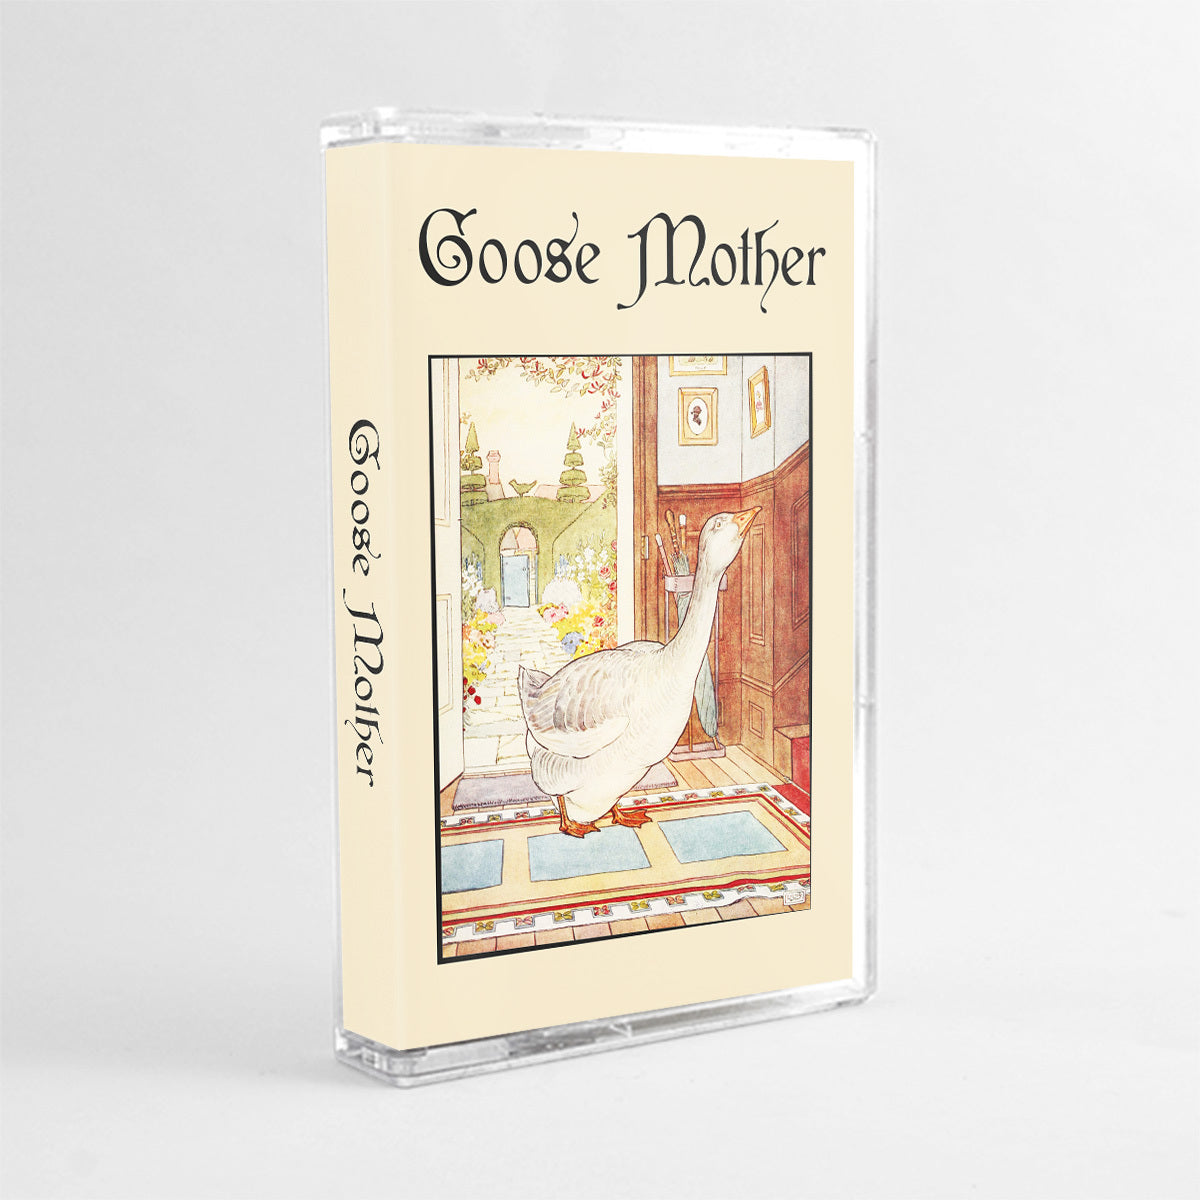 Goose Mother - S/T cassette